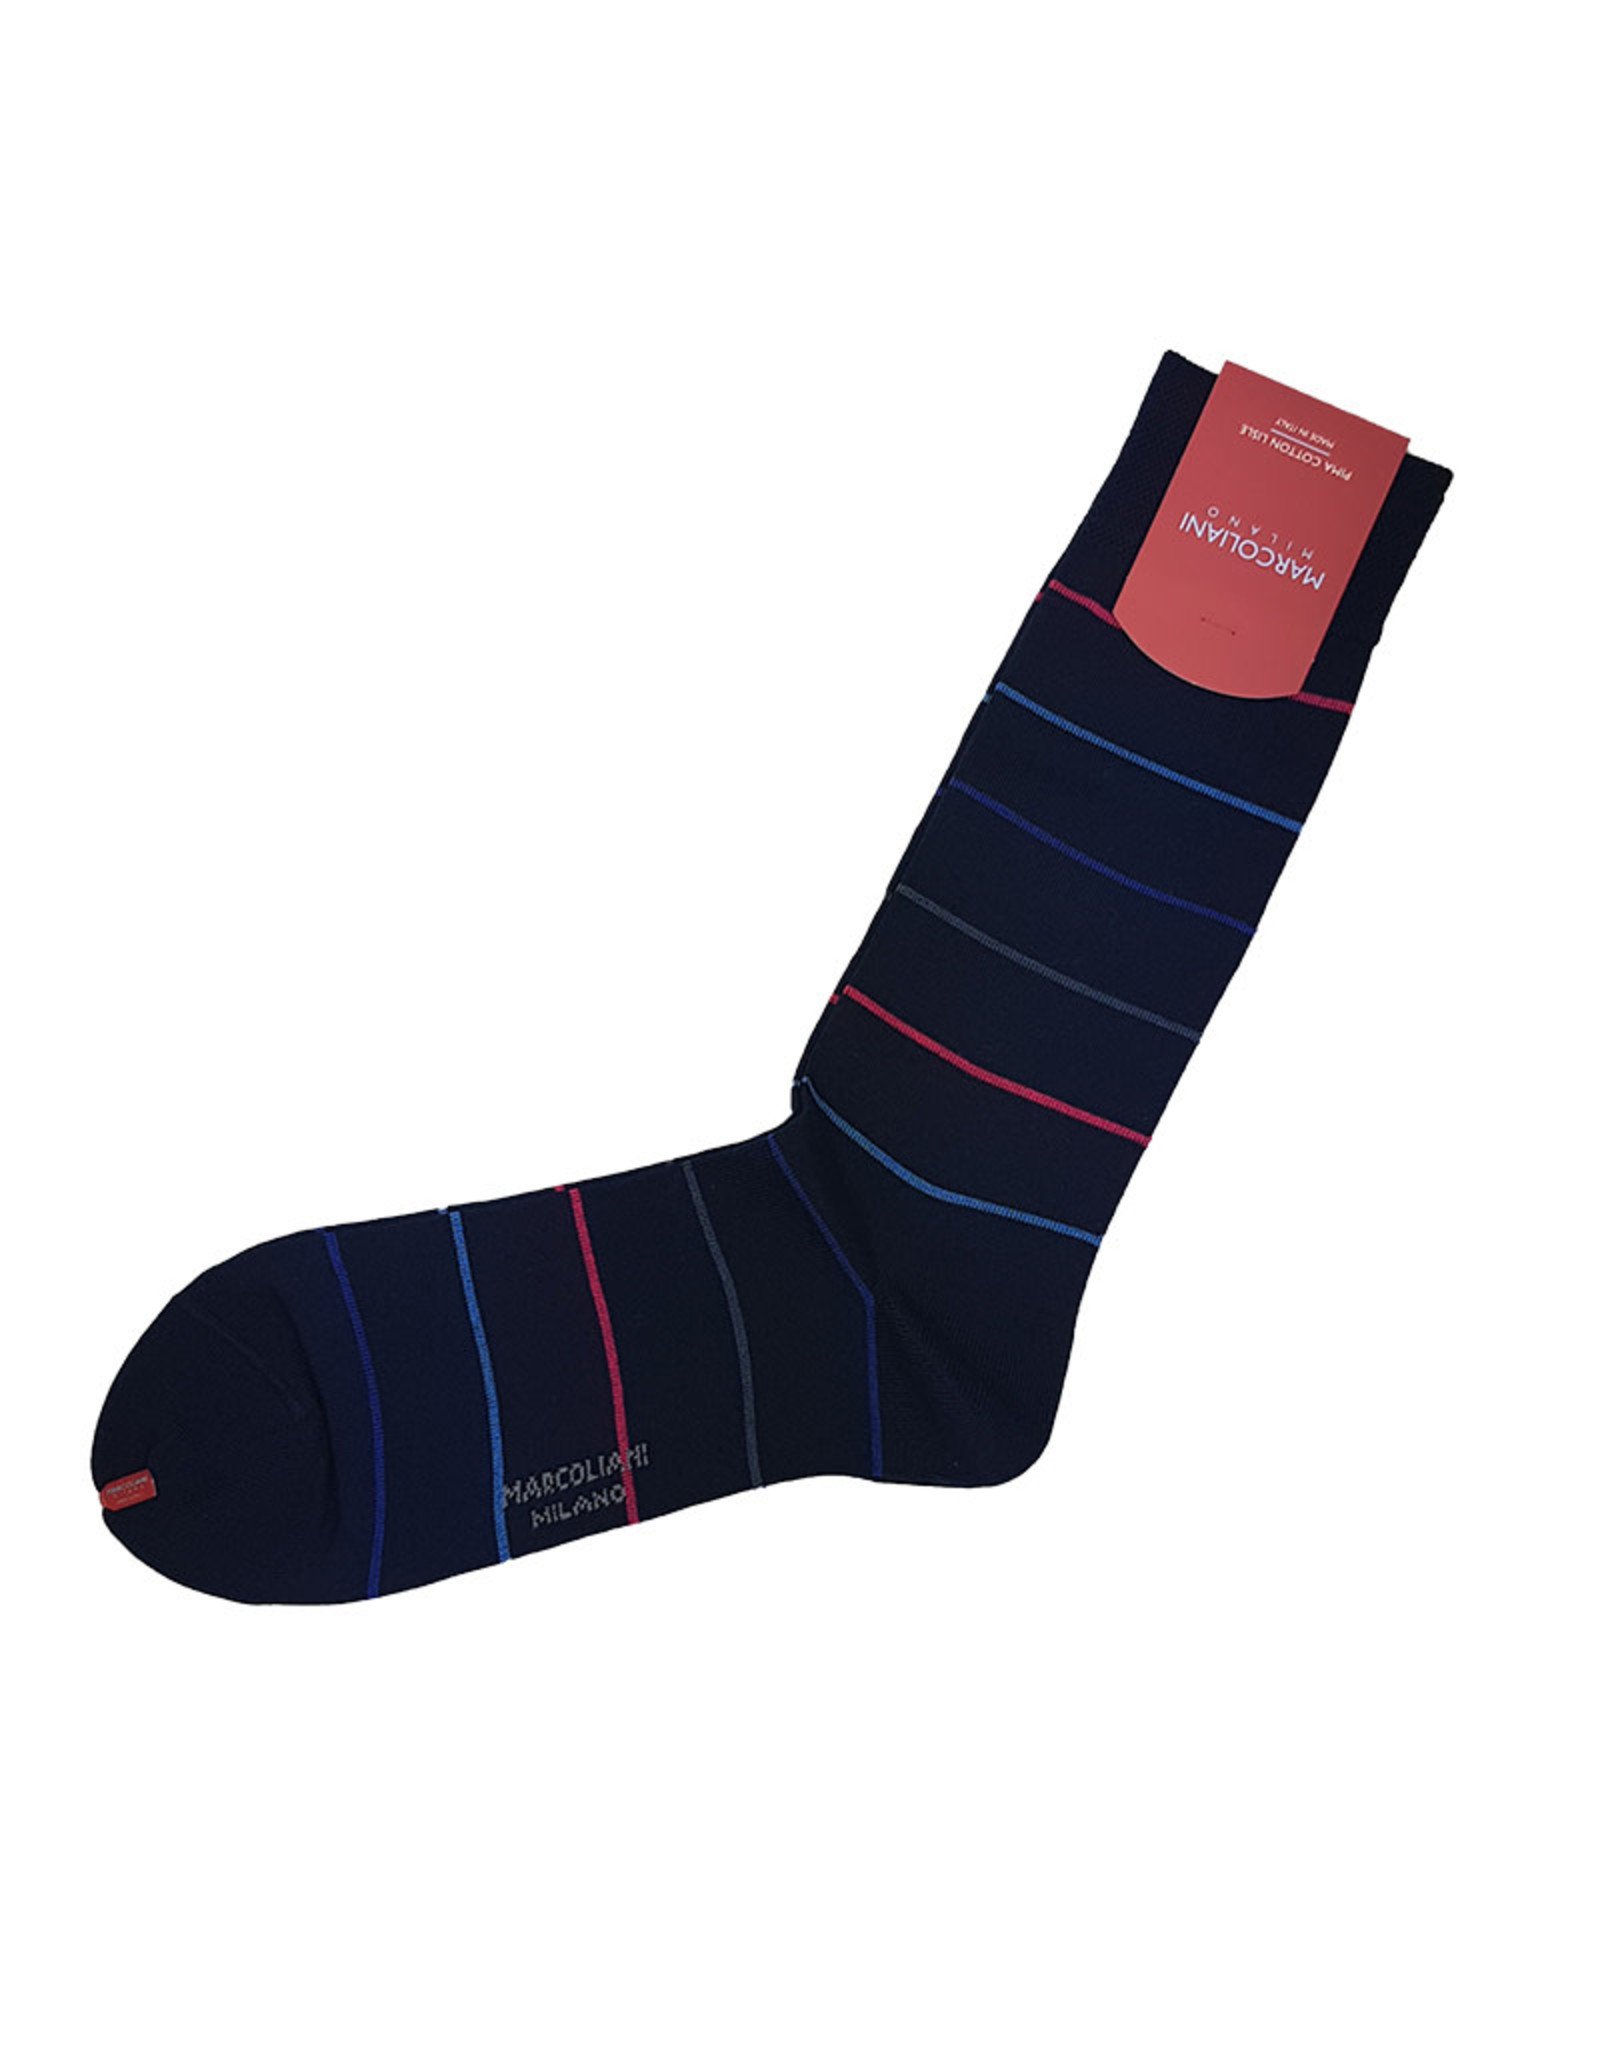 Marcoliani Marcoliani socks navy Scala stripe